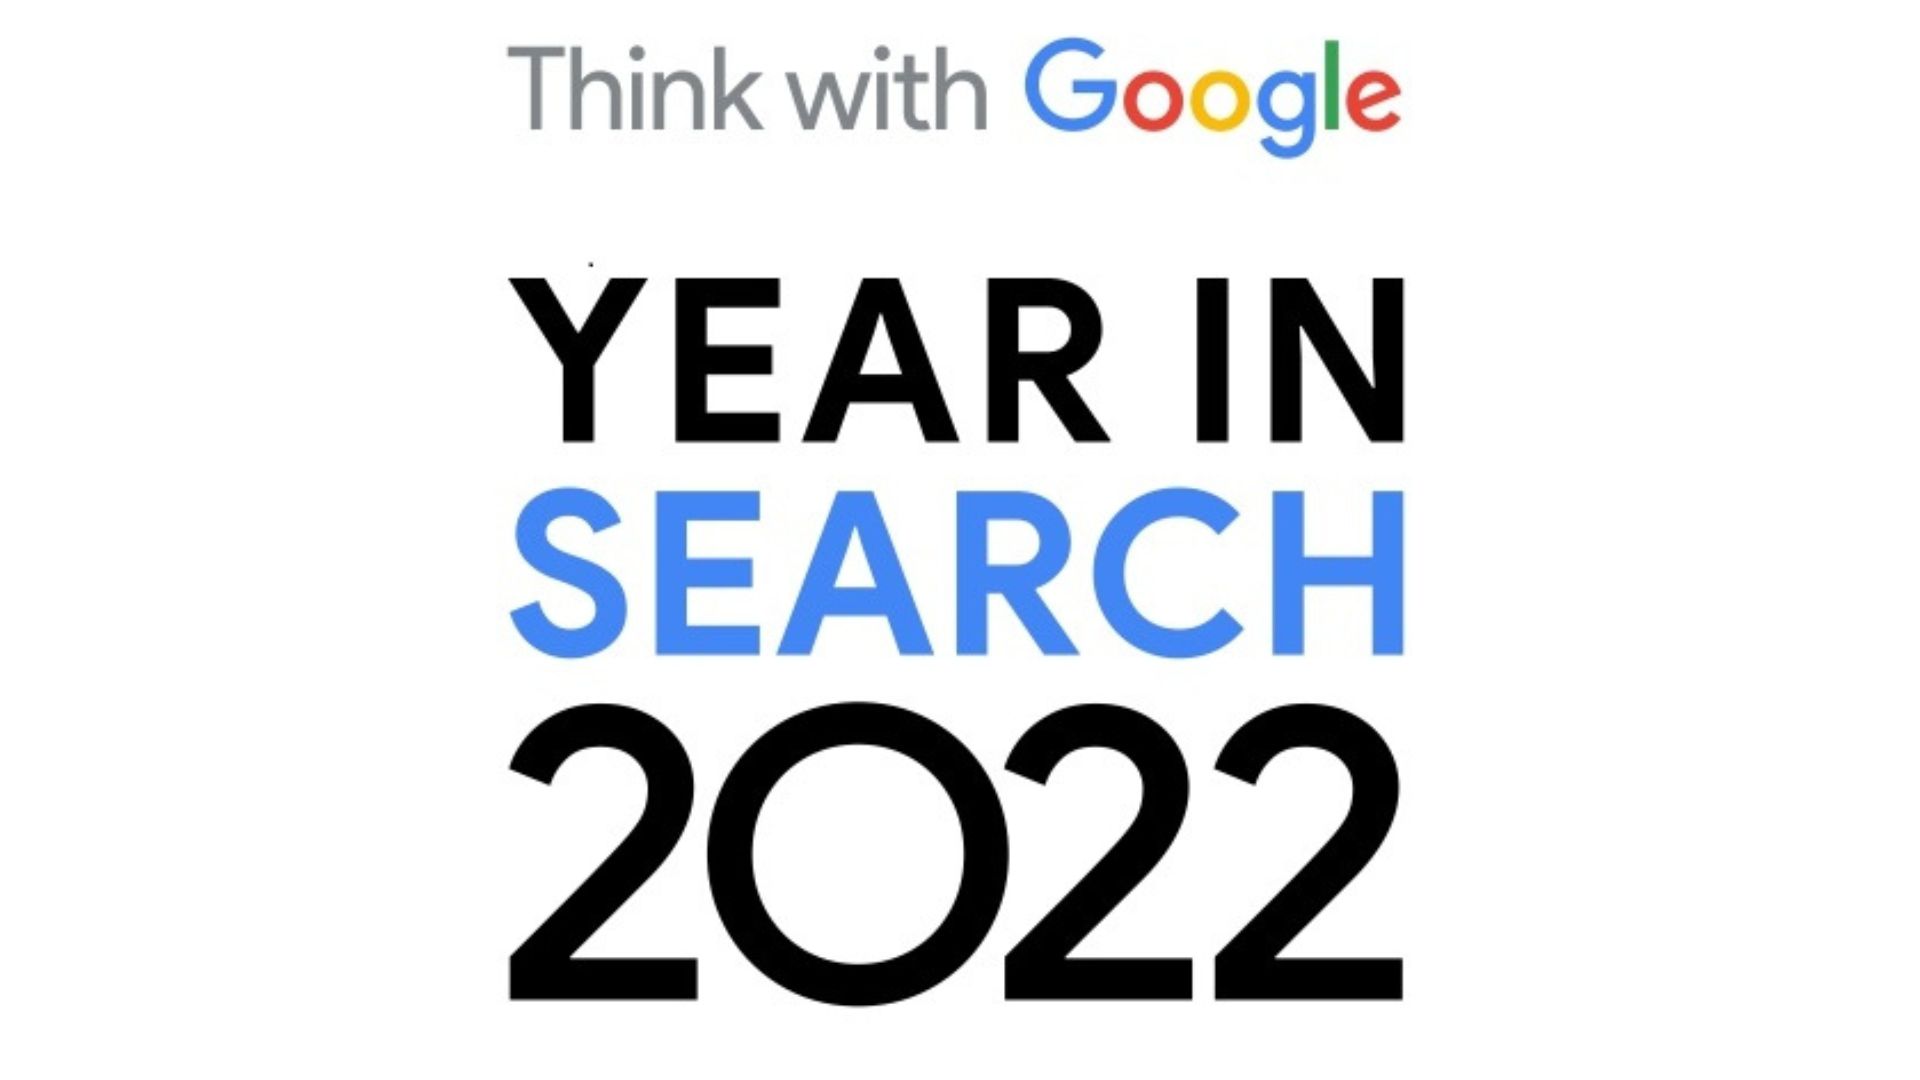 Year in Search 2022 Hong Kong Interactive Advertising Bureau Hong Kong